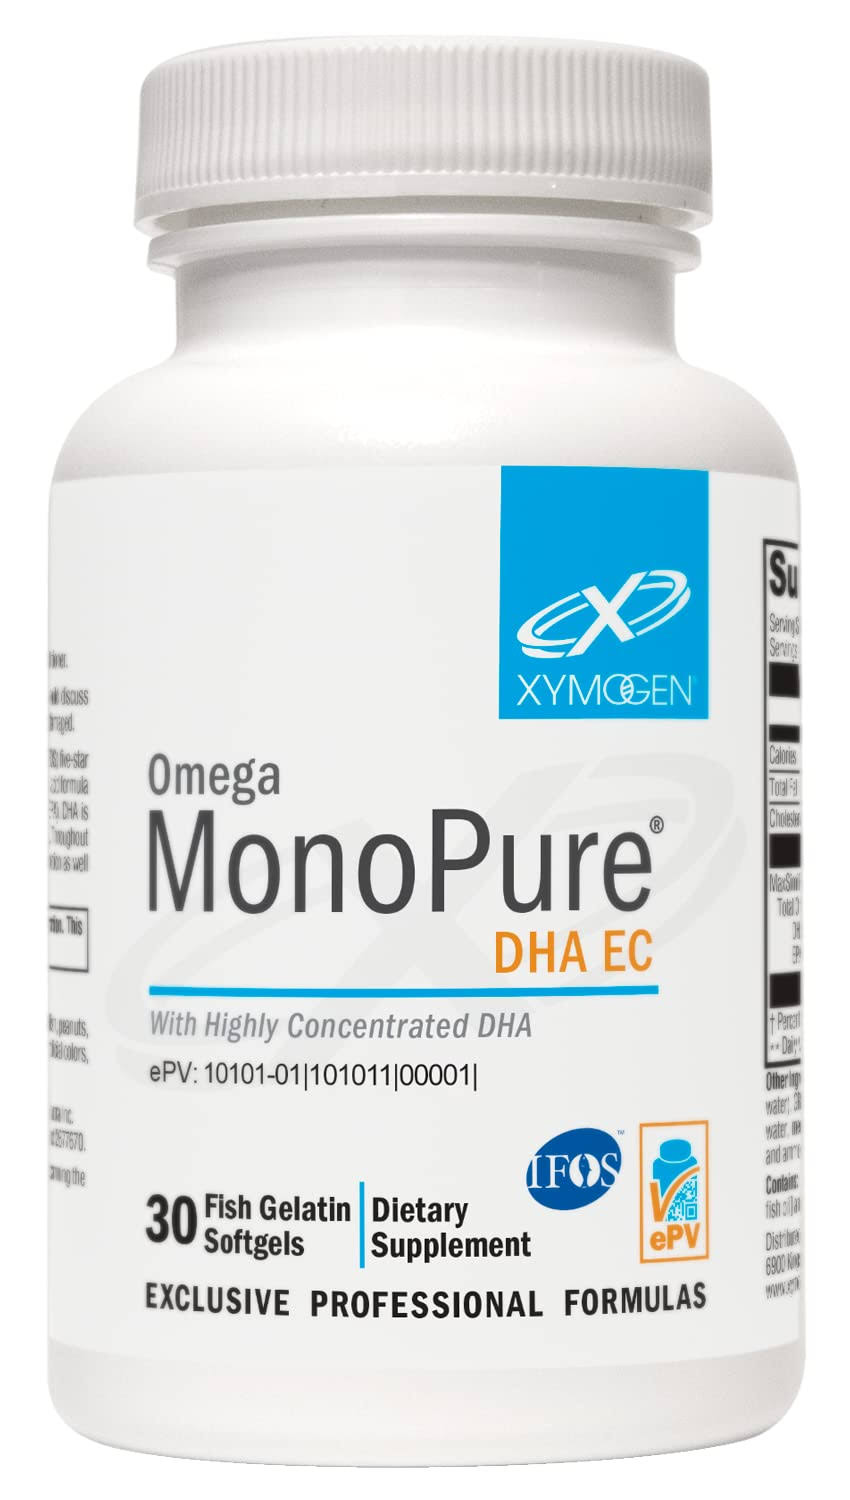 Xymogen Omega MonoPure DHA EC - 2,600 mg - 30 Softgels